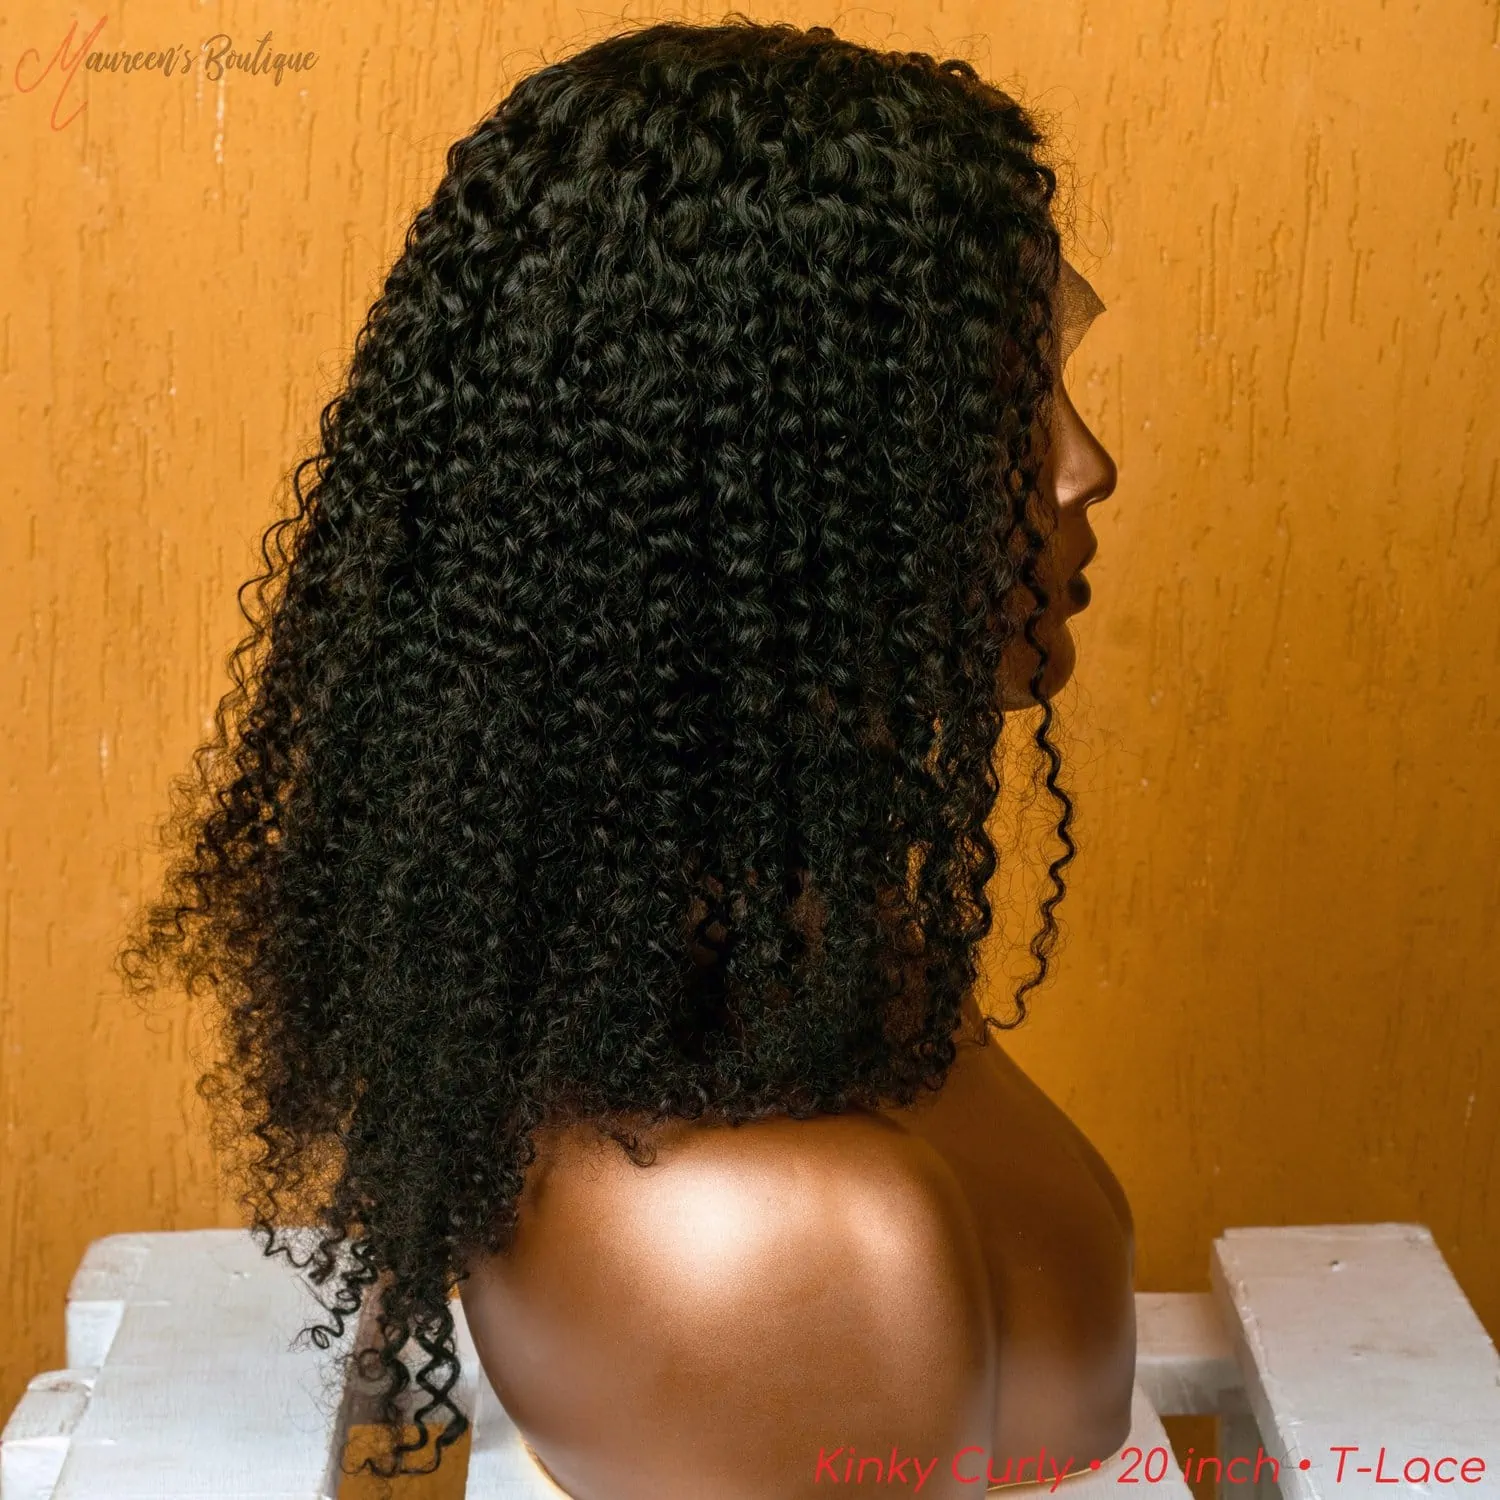 Kinky Curly human hair T Lace wig 20 inch maureens.com 2